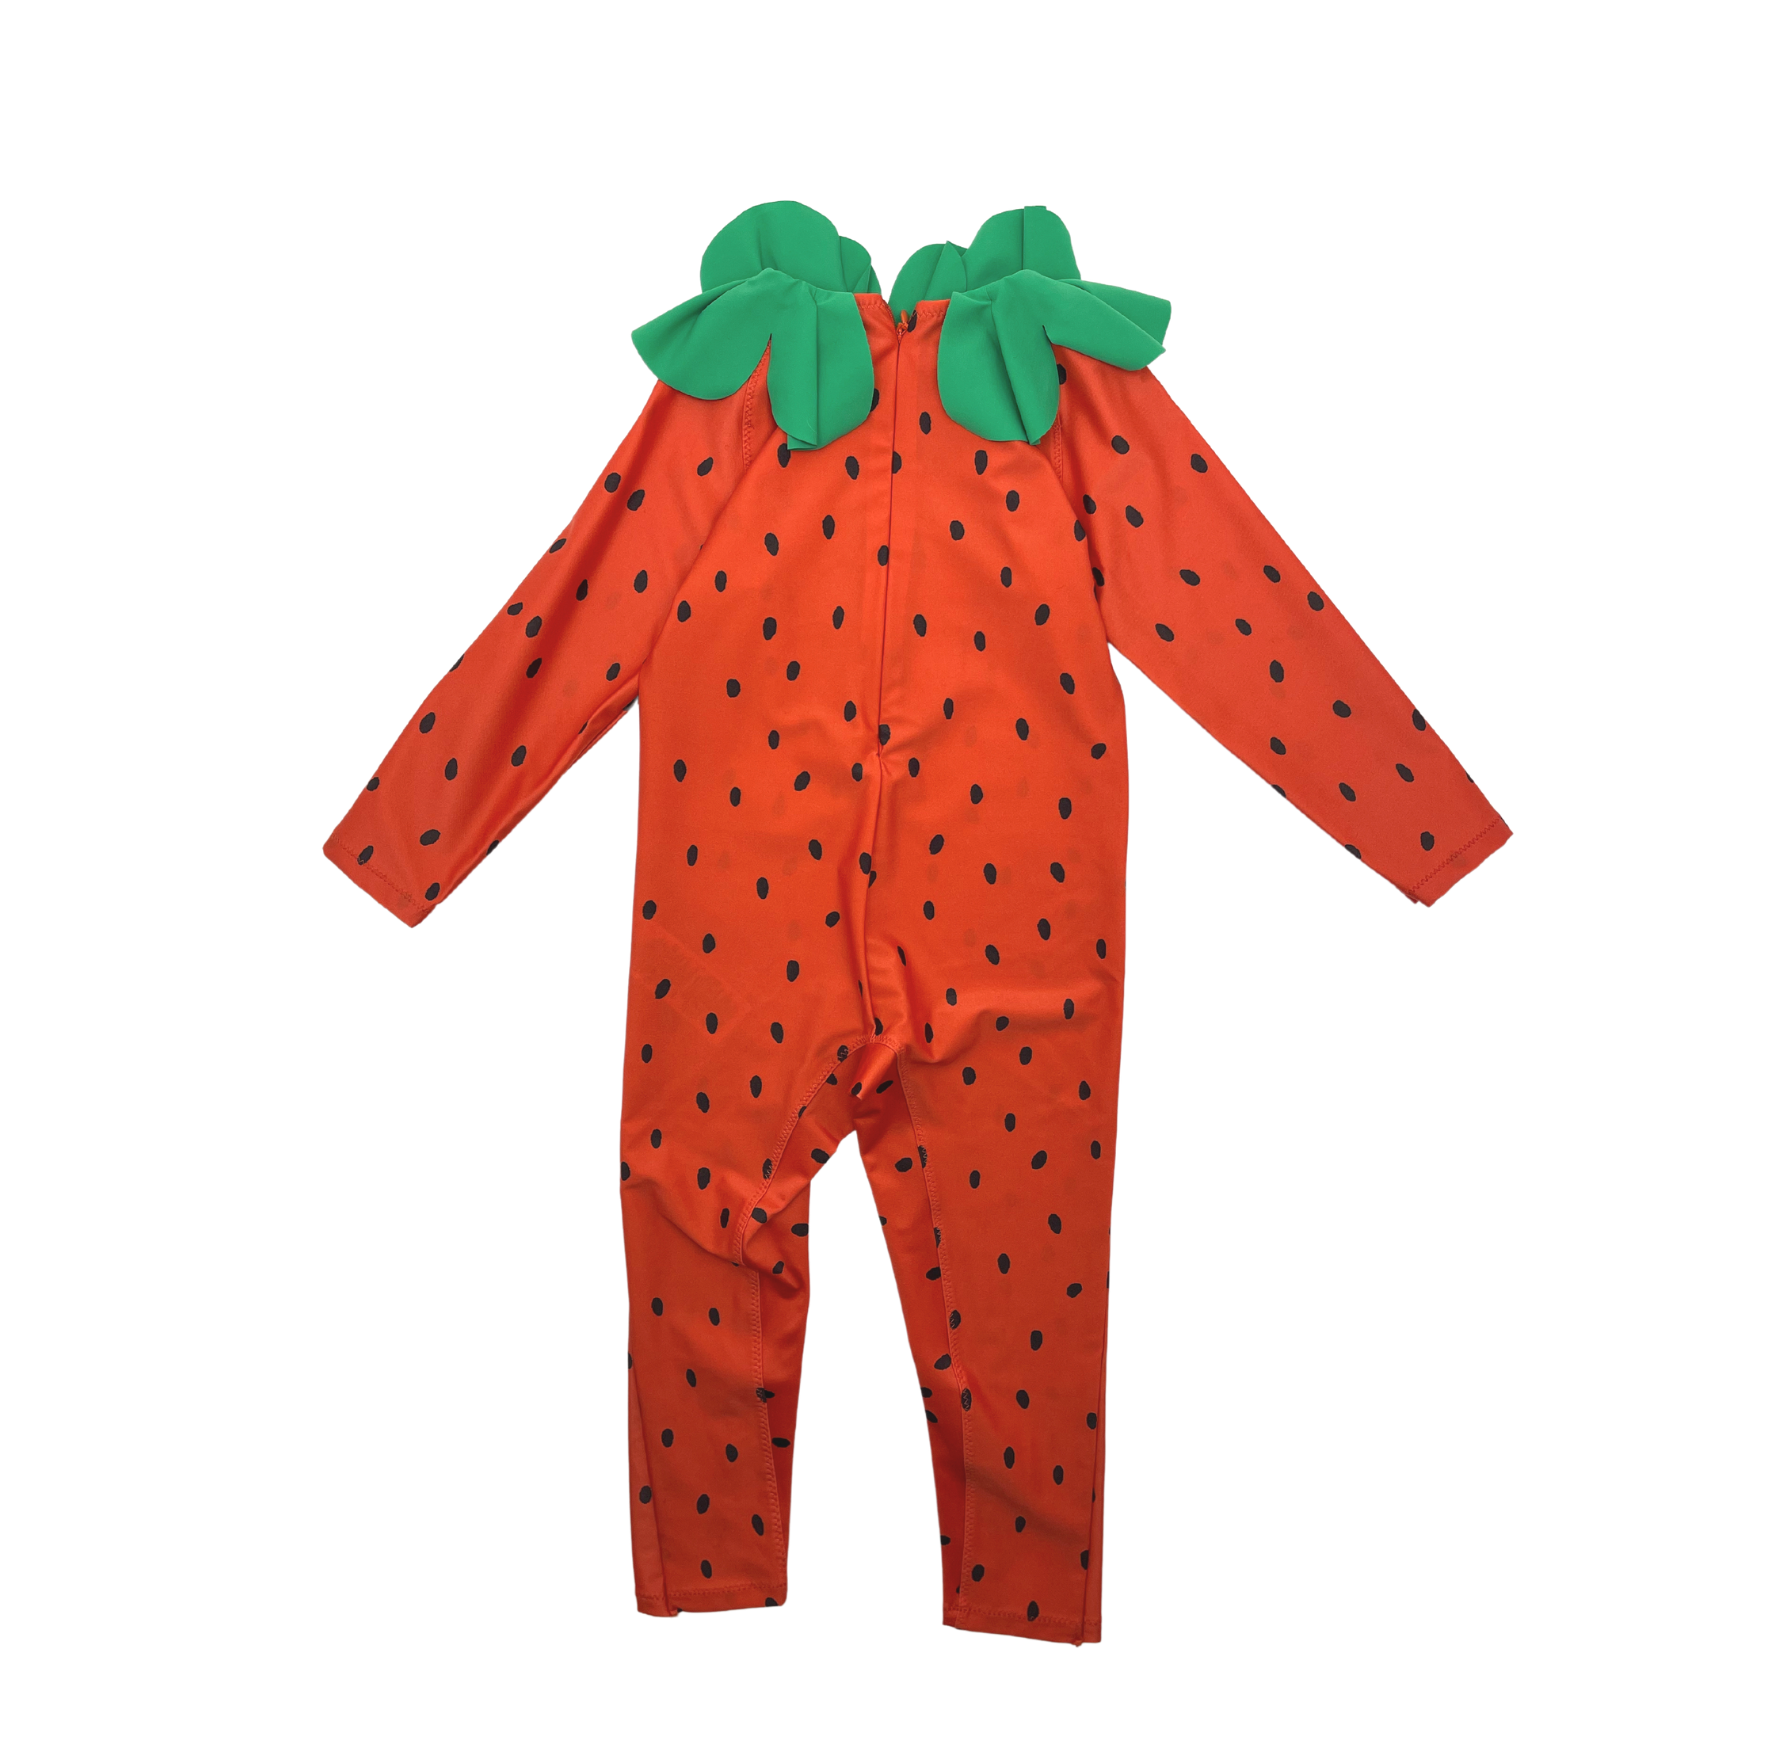 MINI RODINI - Strawberry costume - 18 months/36 months